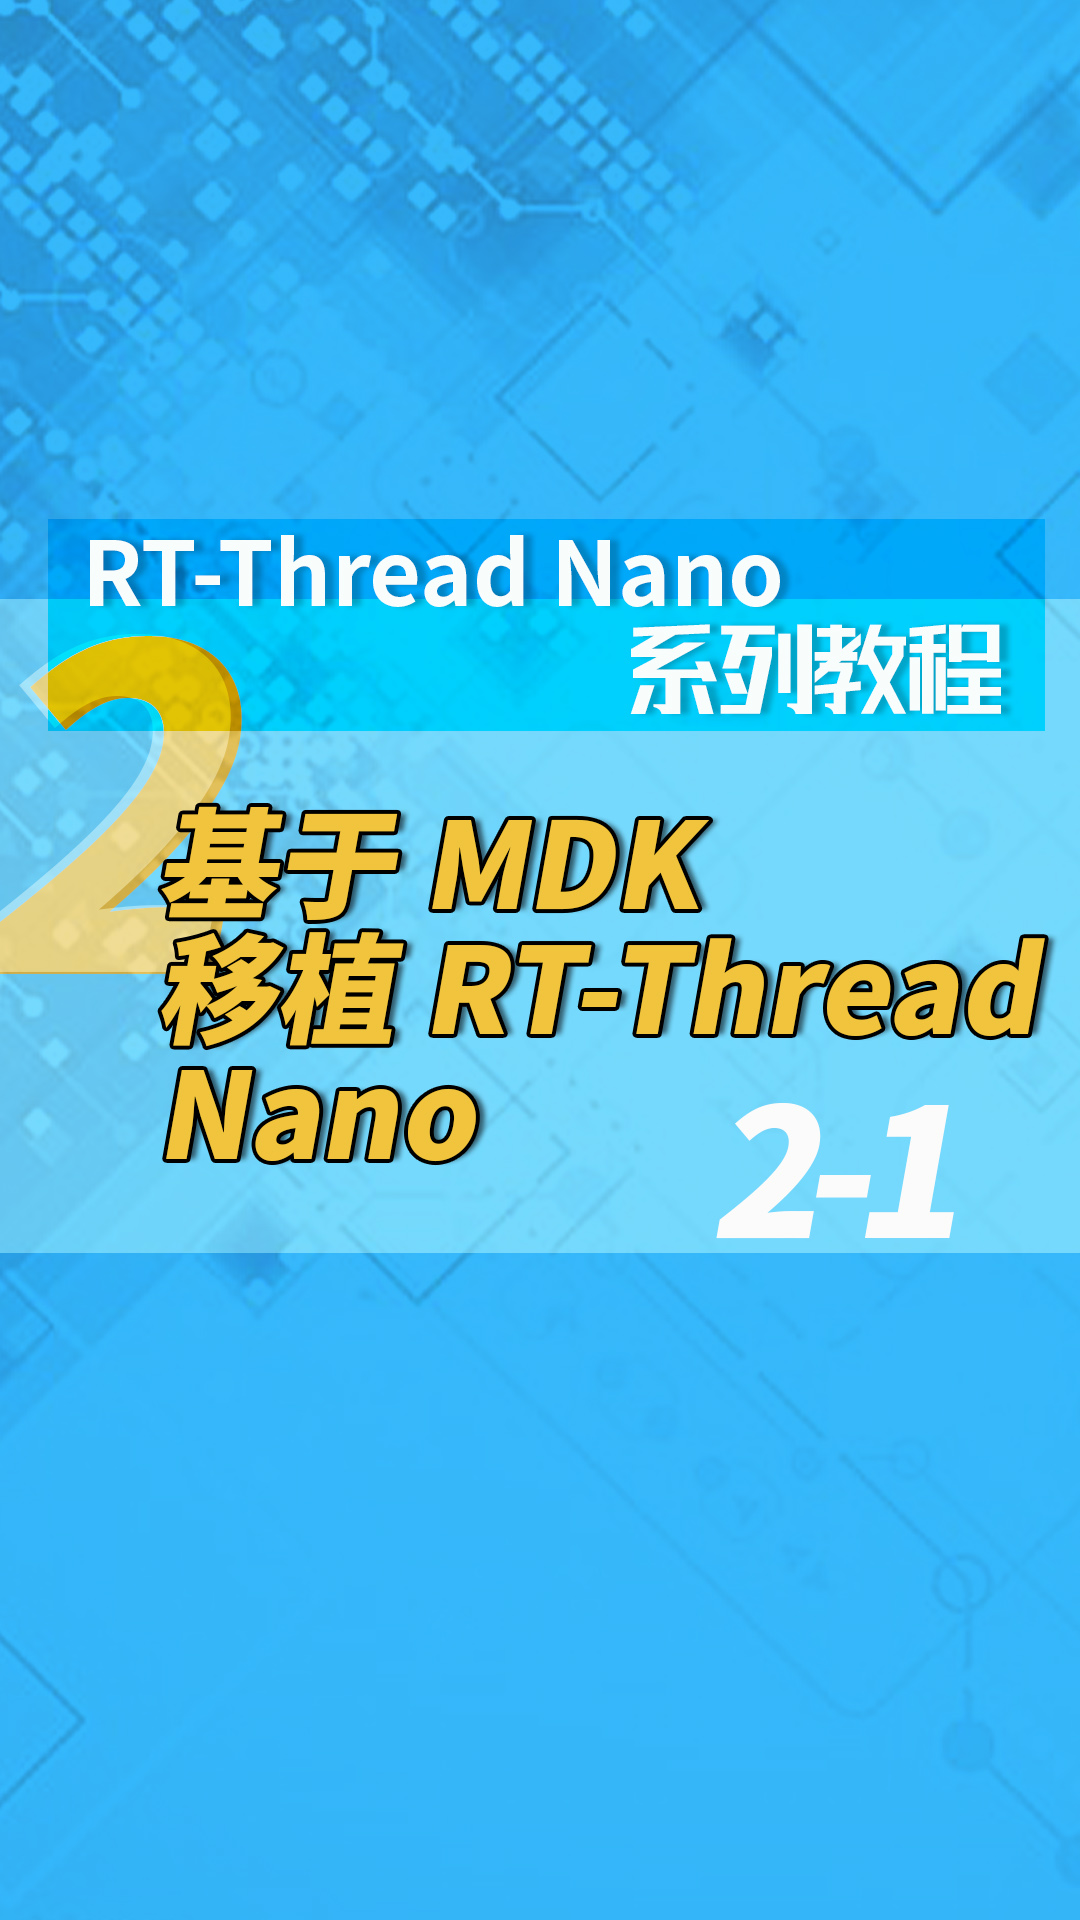 RT-Thread Nano系列教程2-1基于 MDK 移植 RT-Thread Nano